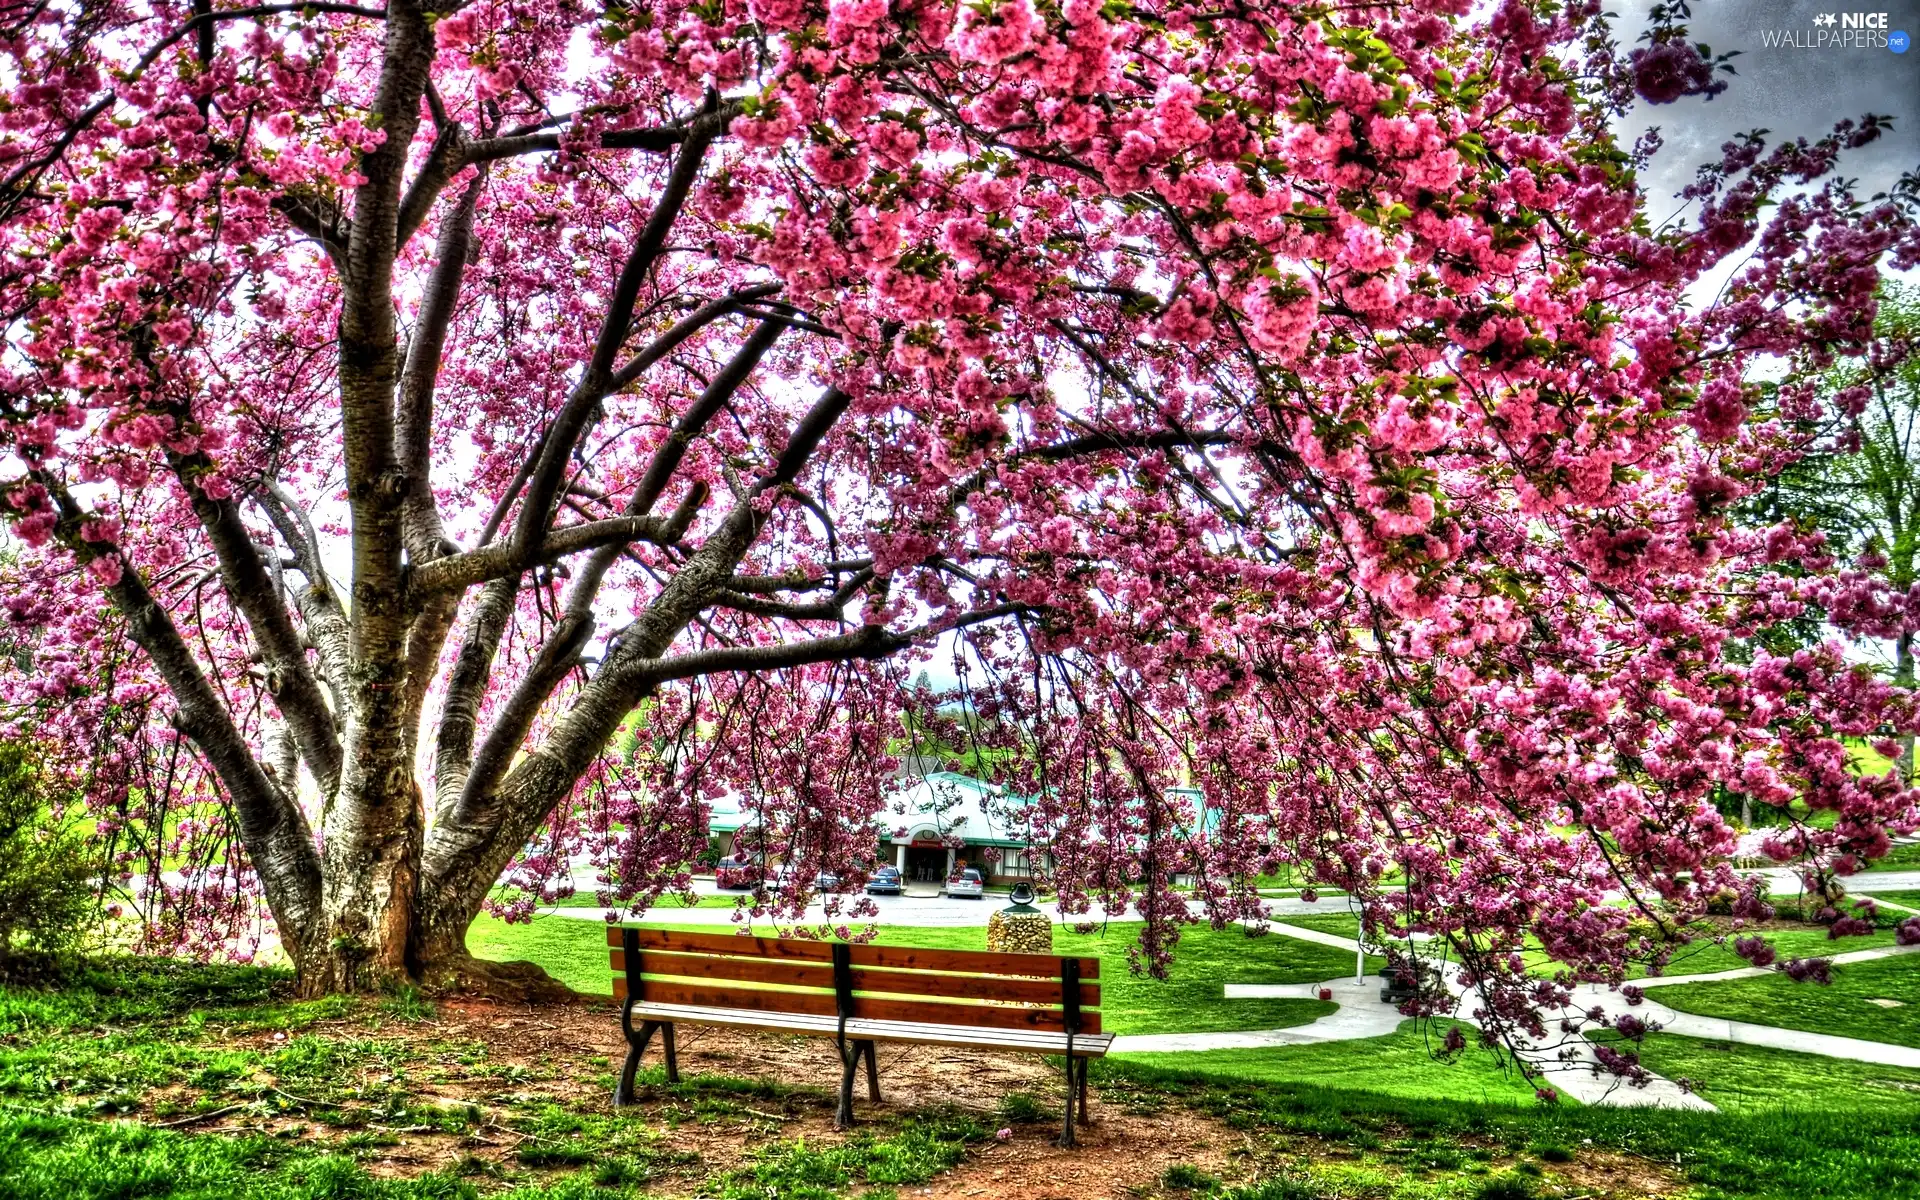 trees, Bench, Park, flourishing, Spring